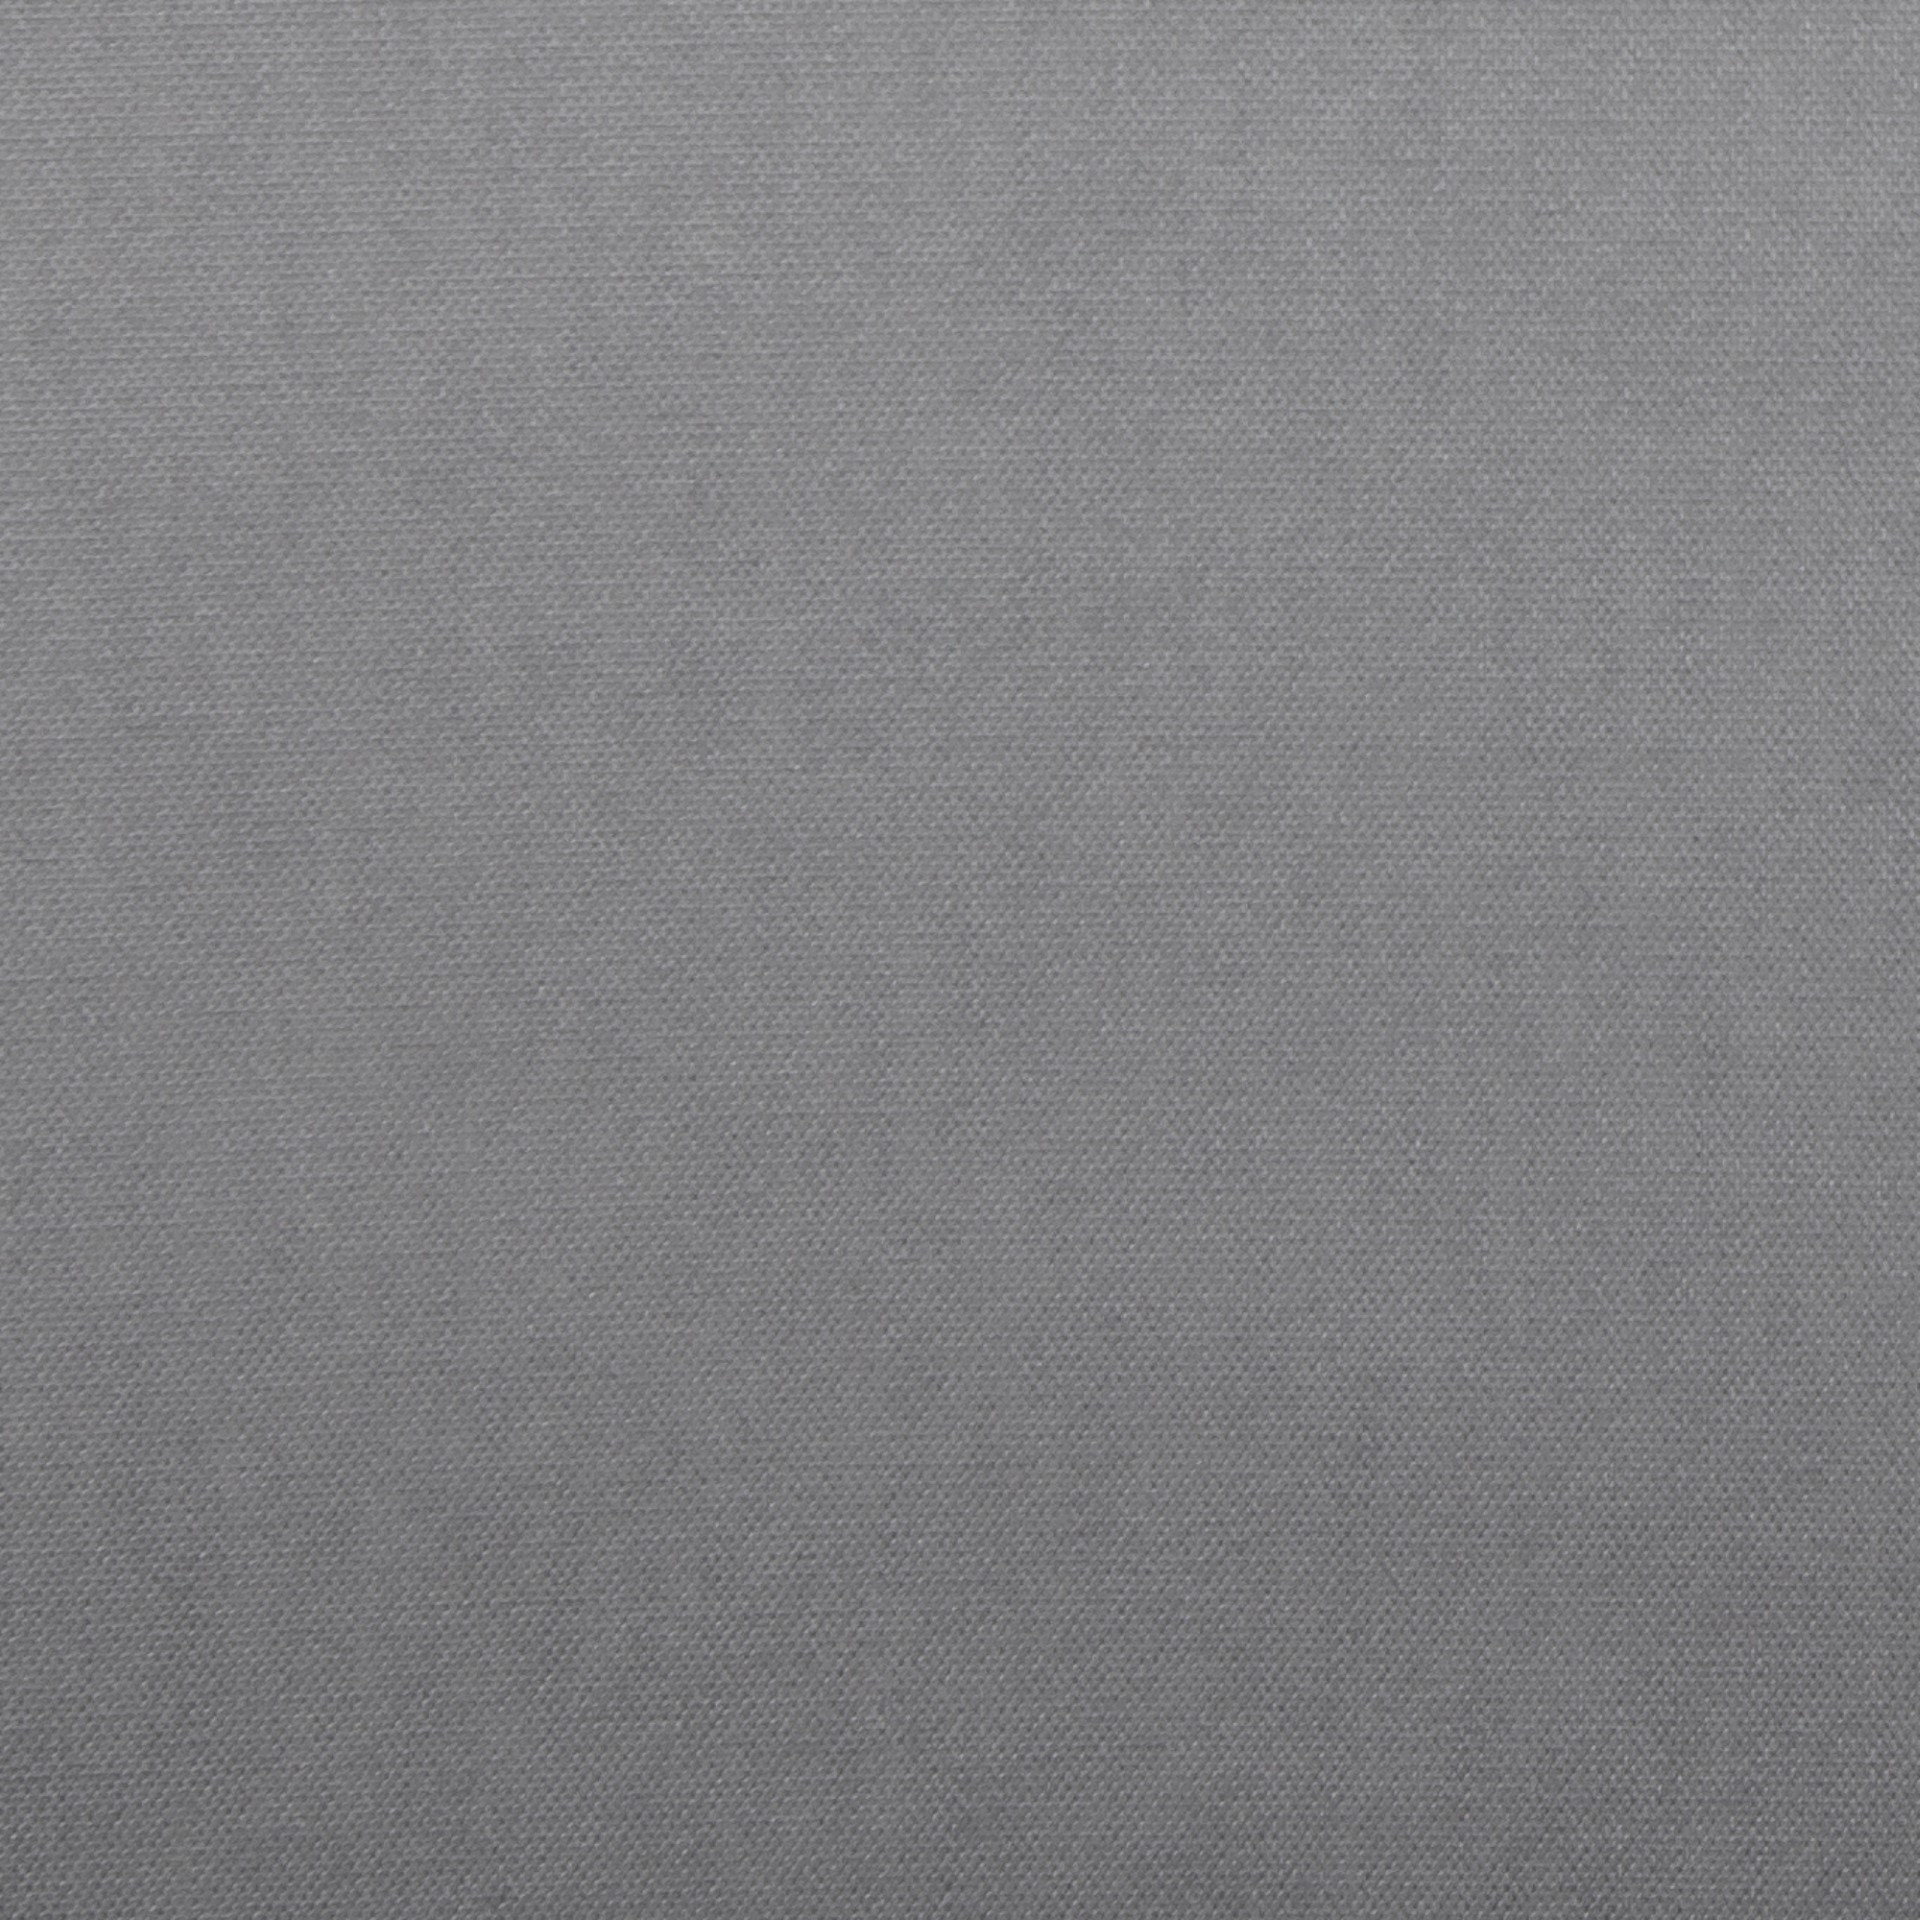 Essenza Translucent Roller Blind Grey Fabric Detail